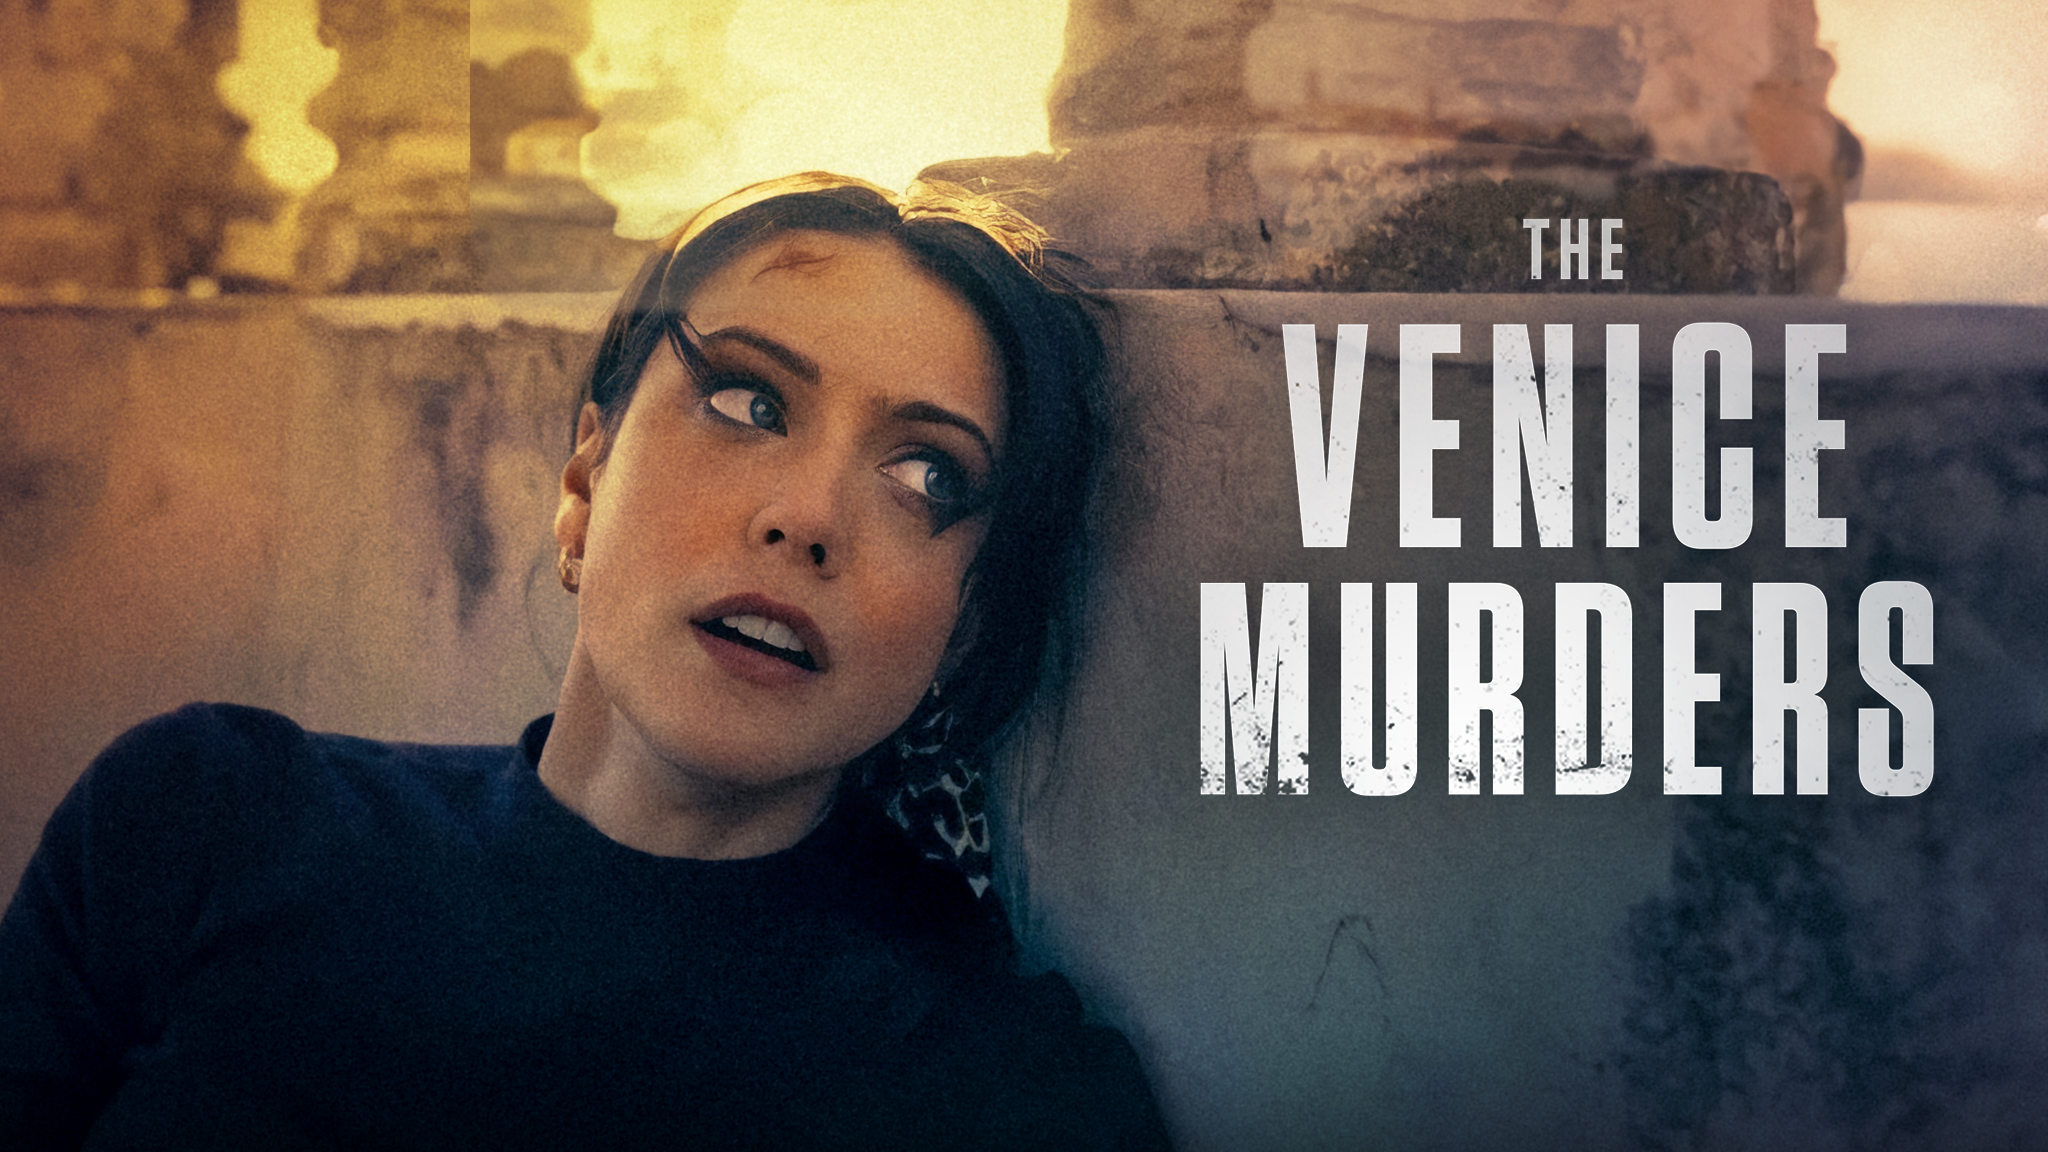 The Venice Murders